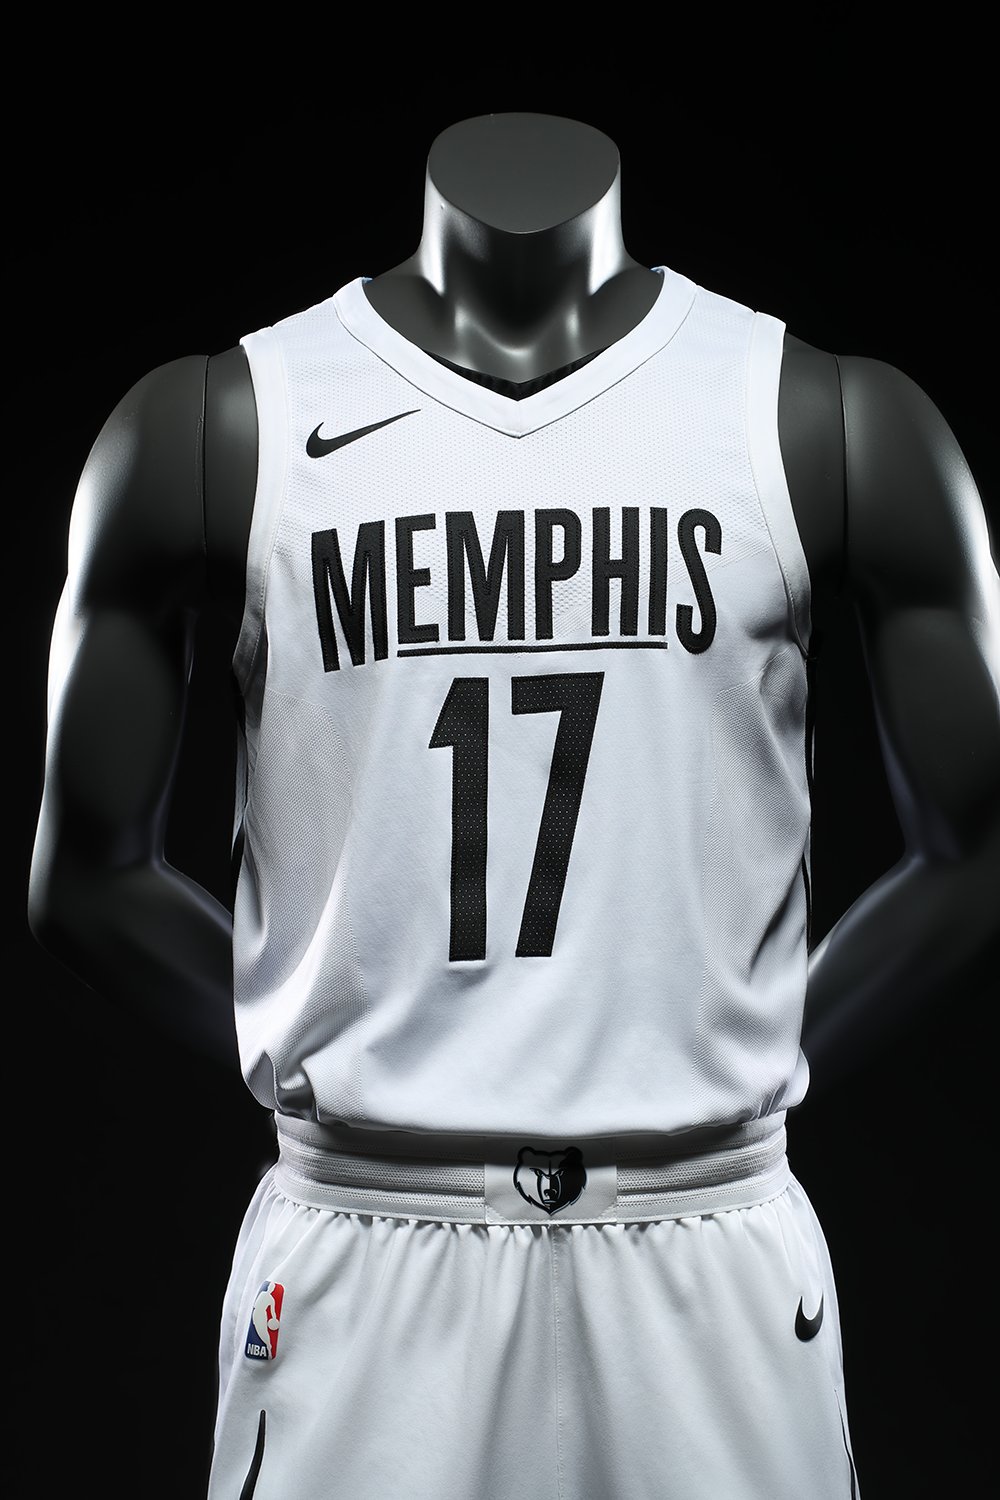 Memphis Grizzlies on X: Our MLK50 City Edition uniform is